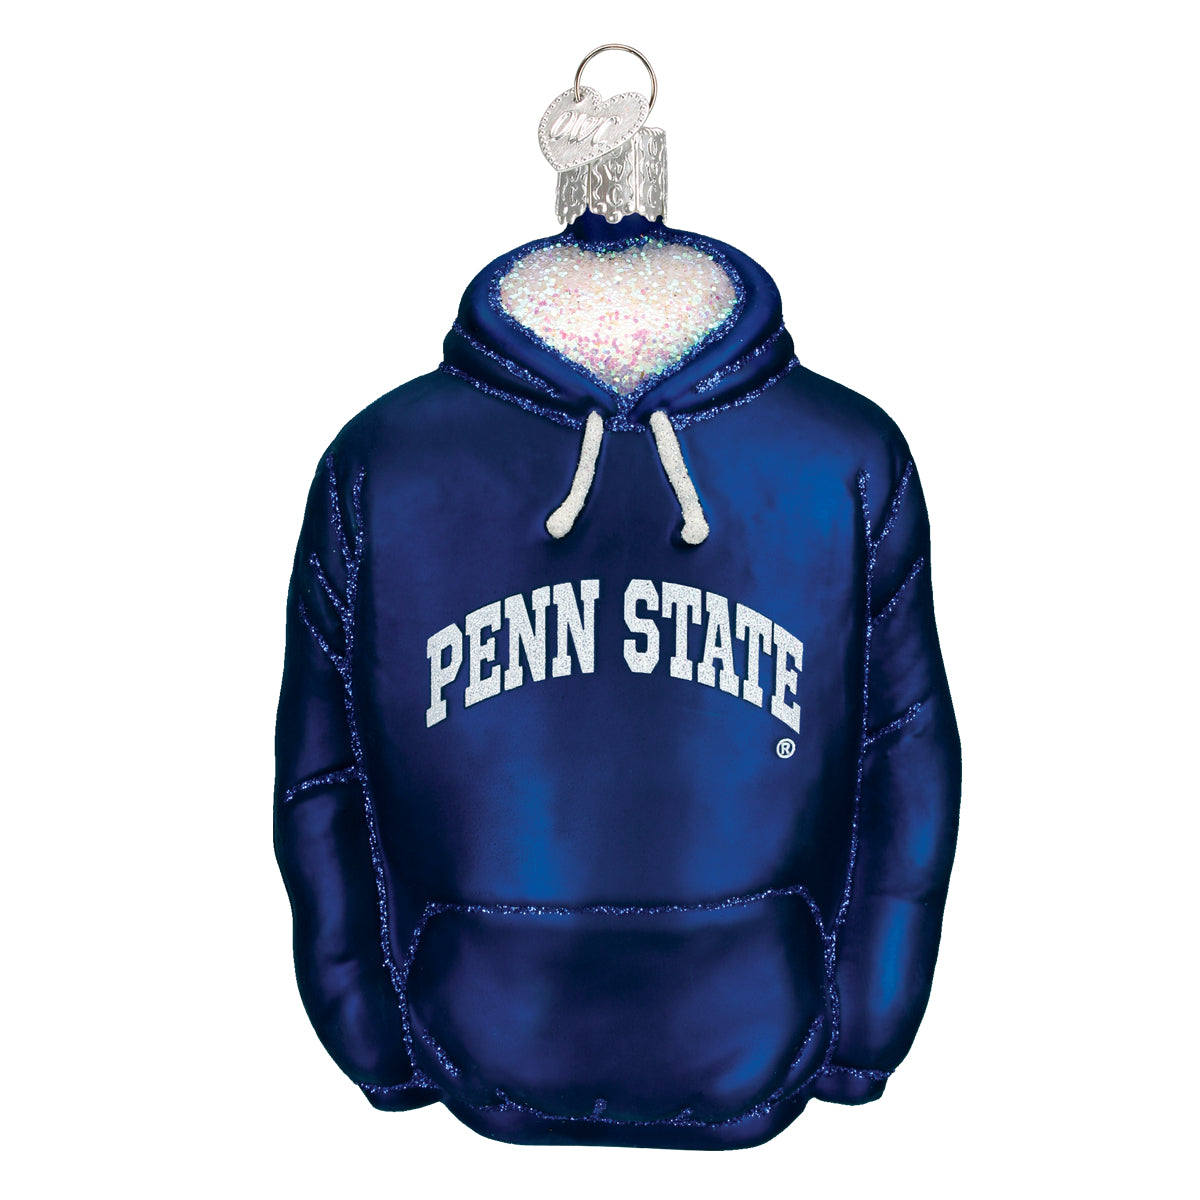 Penn State Hoodie Ornament